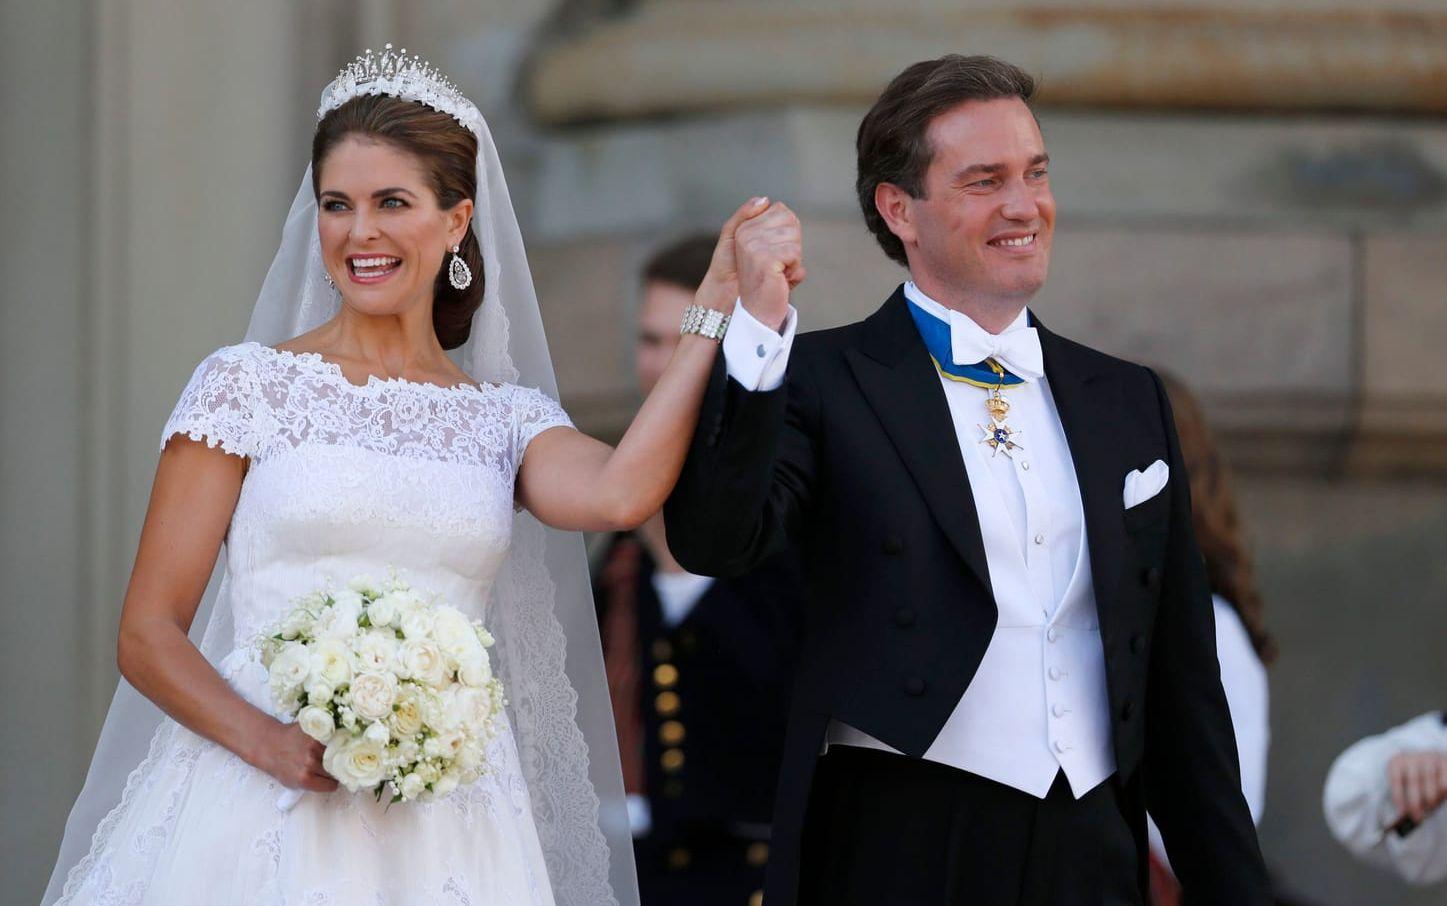 2013 gifte sig Prinsessan Madeleine och Christopher O'Neill.